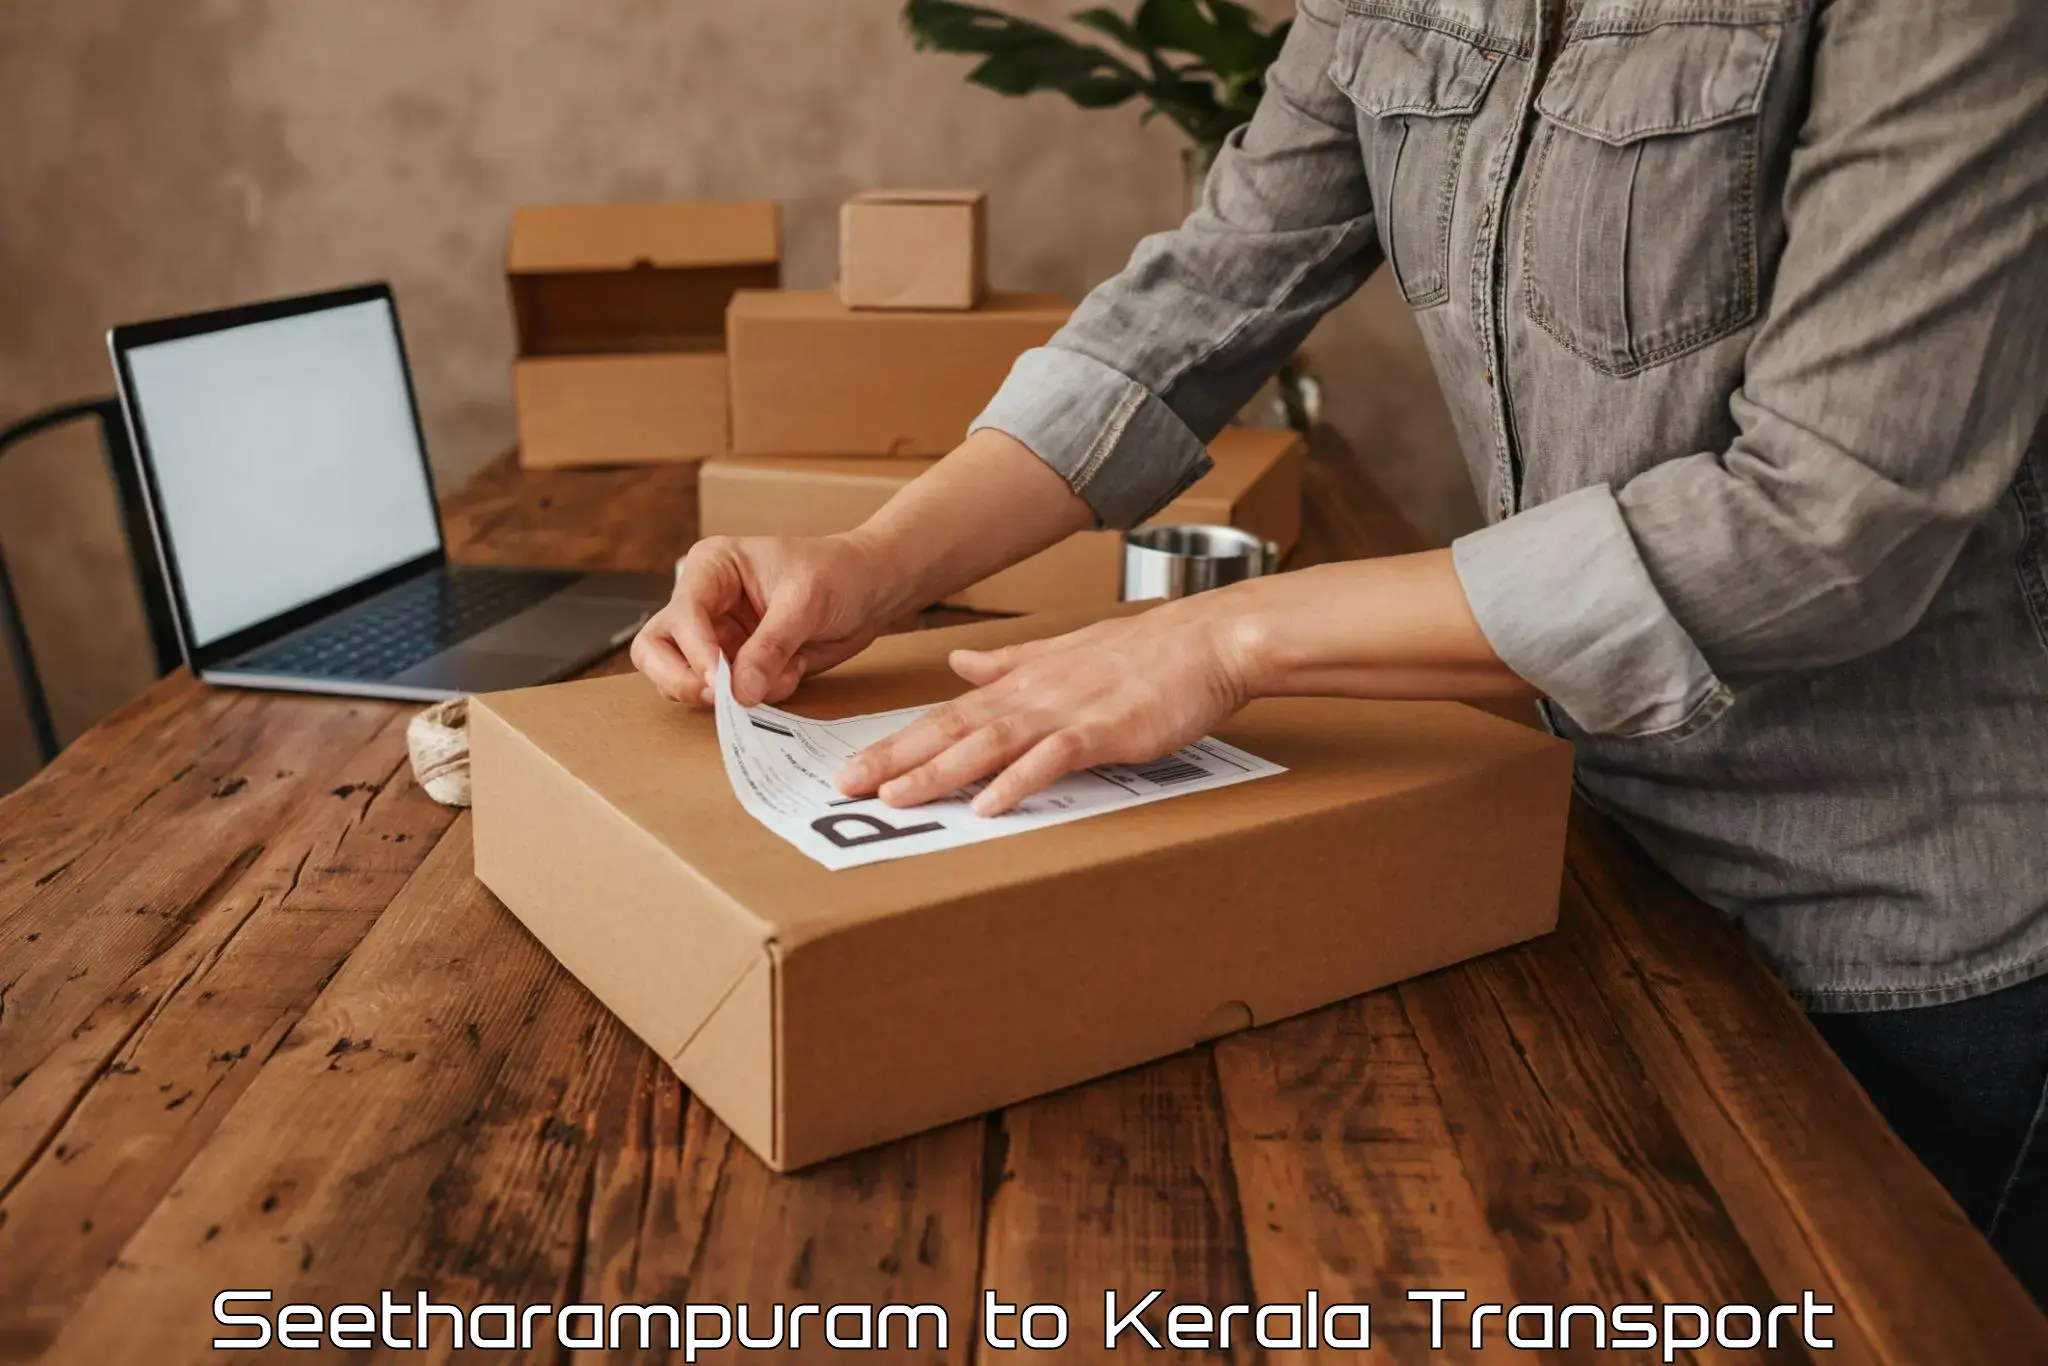 All India transport service Seetharampuram to Kollam